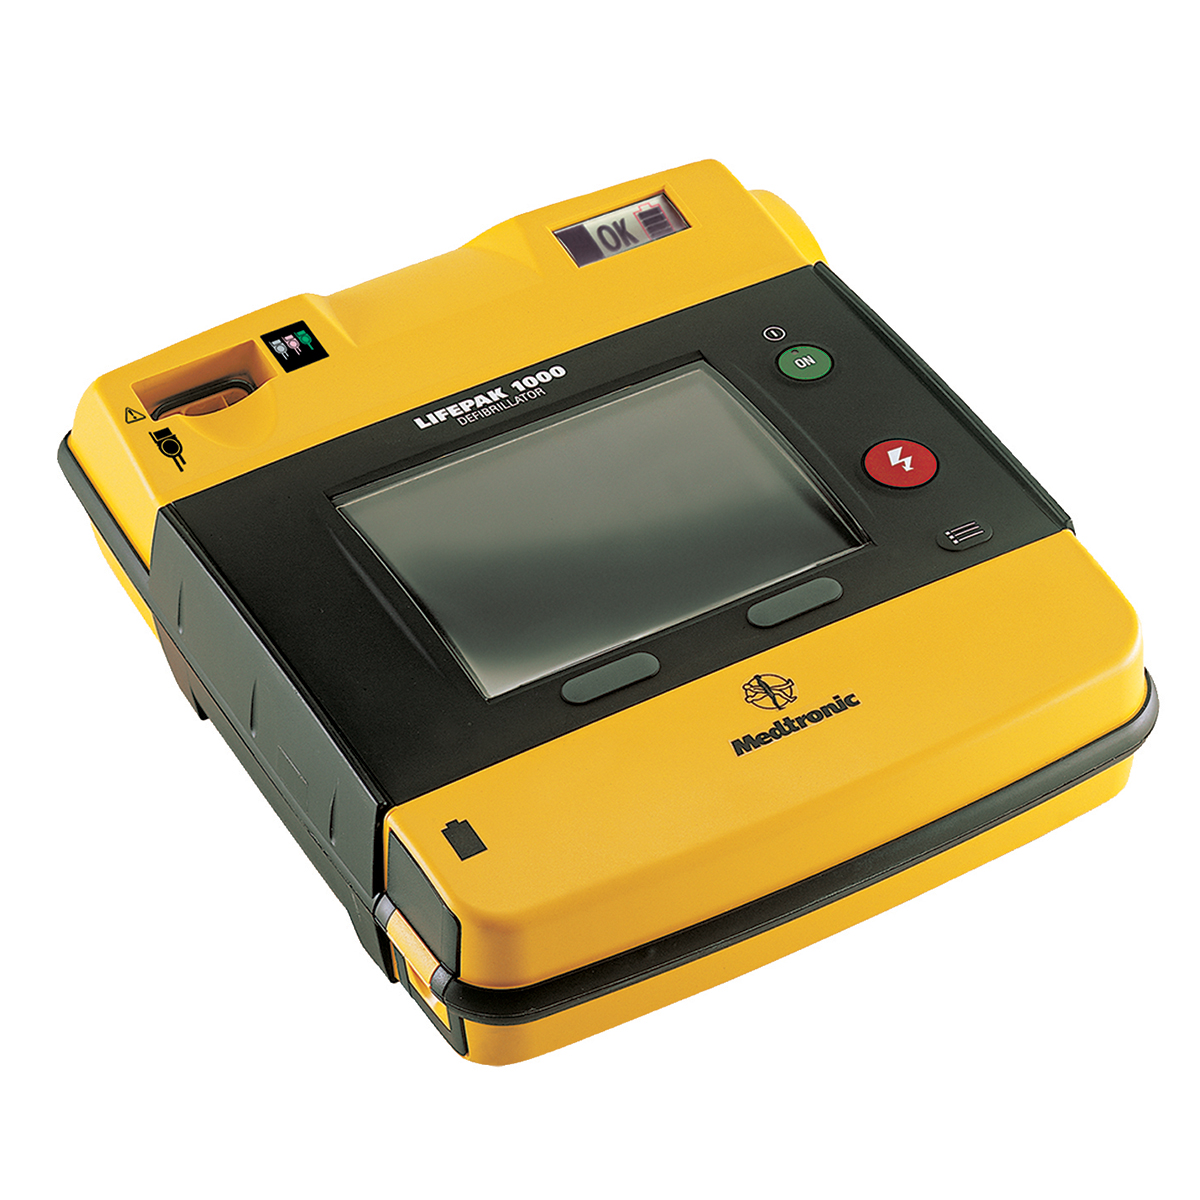 Physio-Control Lifepak® 1000 Semi-Automatic Defibrillator with ECG display and manual override